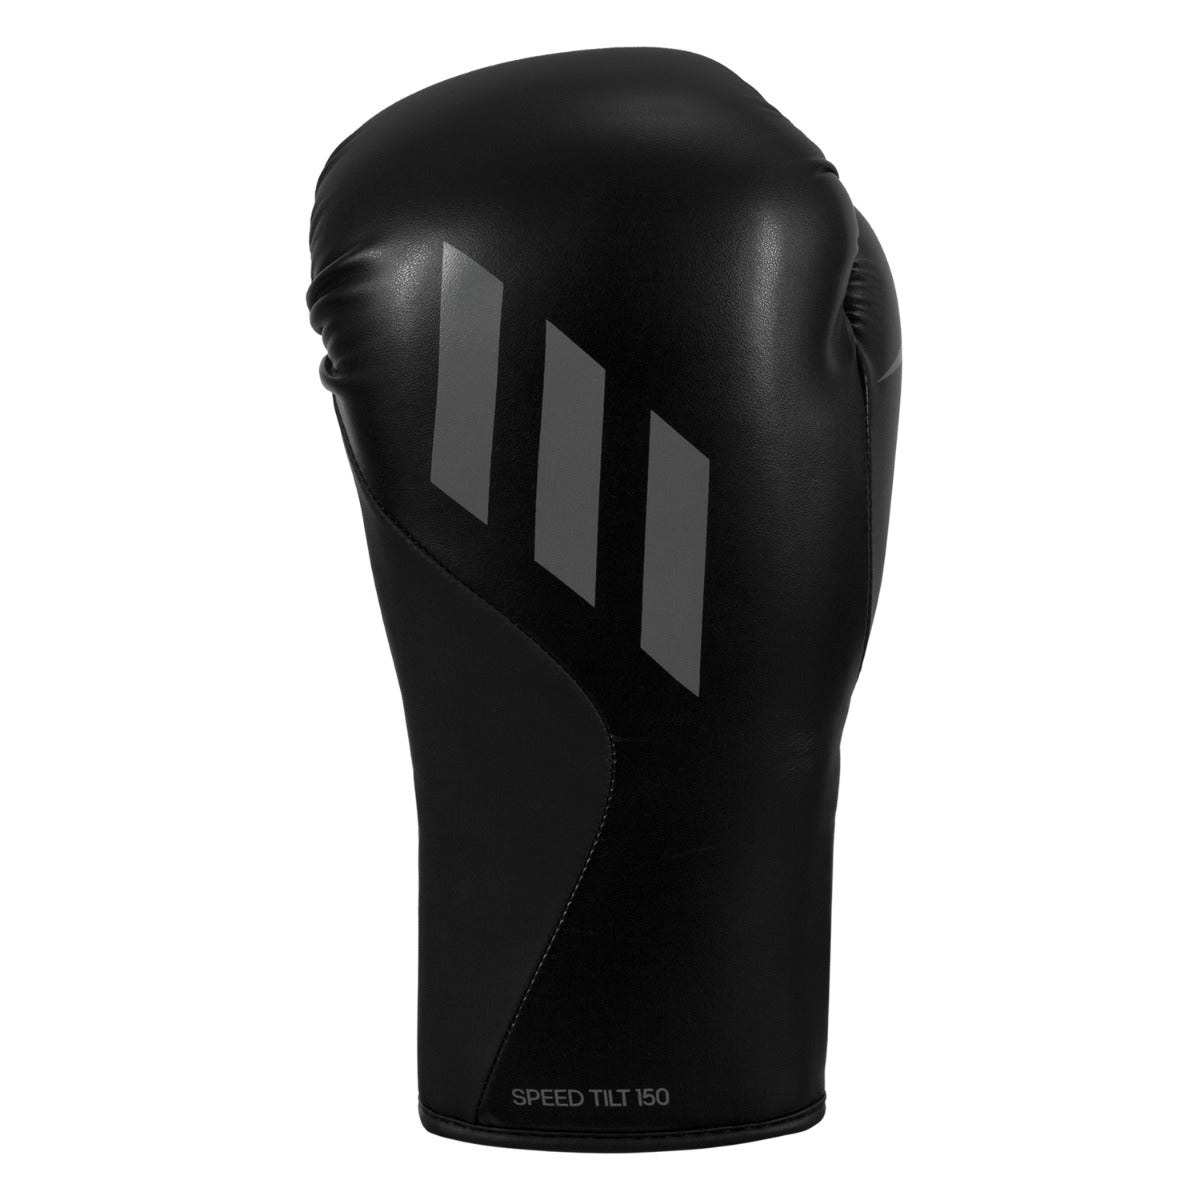 Gloves Boxing Speed ADIDAS 150 Tilt Training